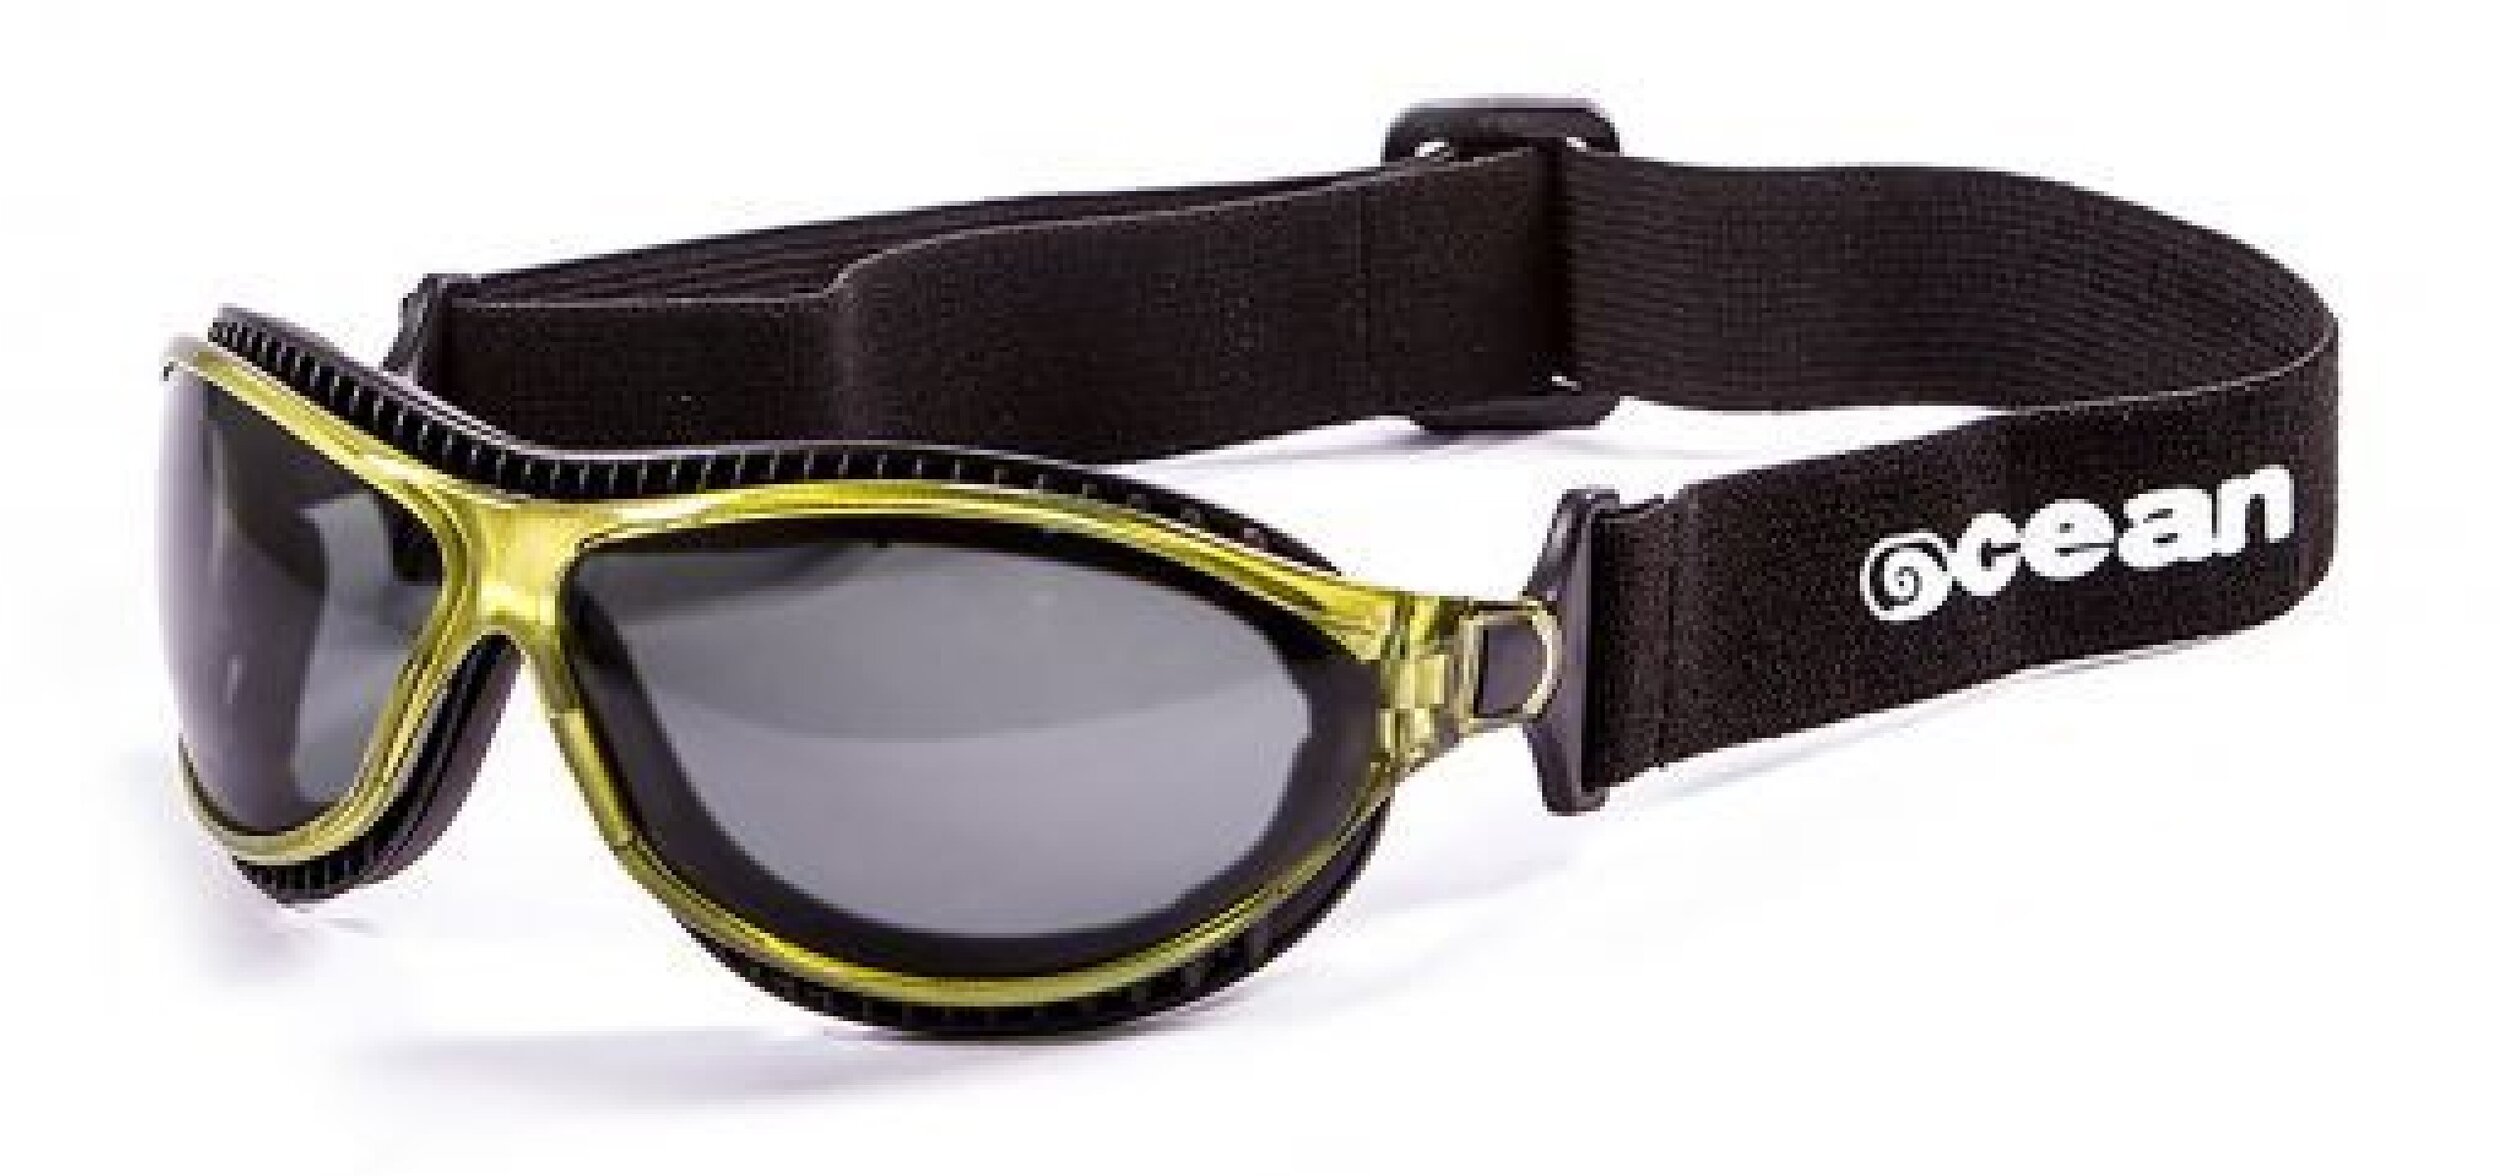 Ocean Glasses Sunglasses Tierra De Fuego White  frames w/polarized Revo lens NEW 